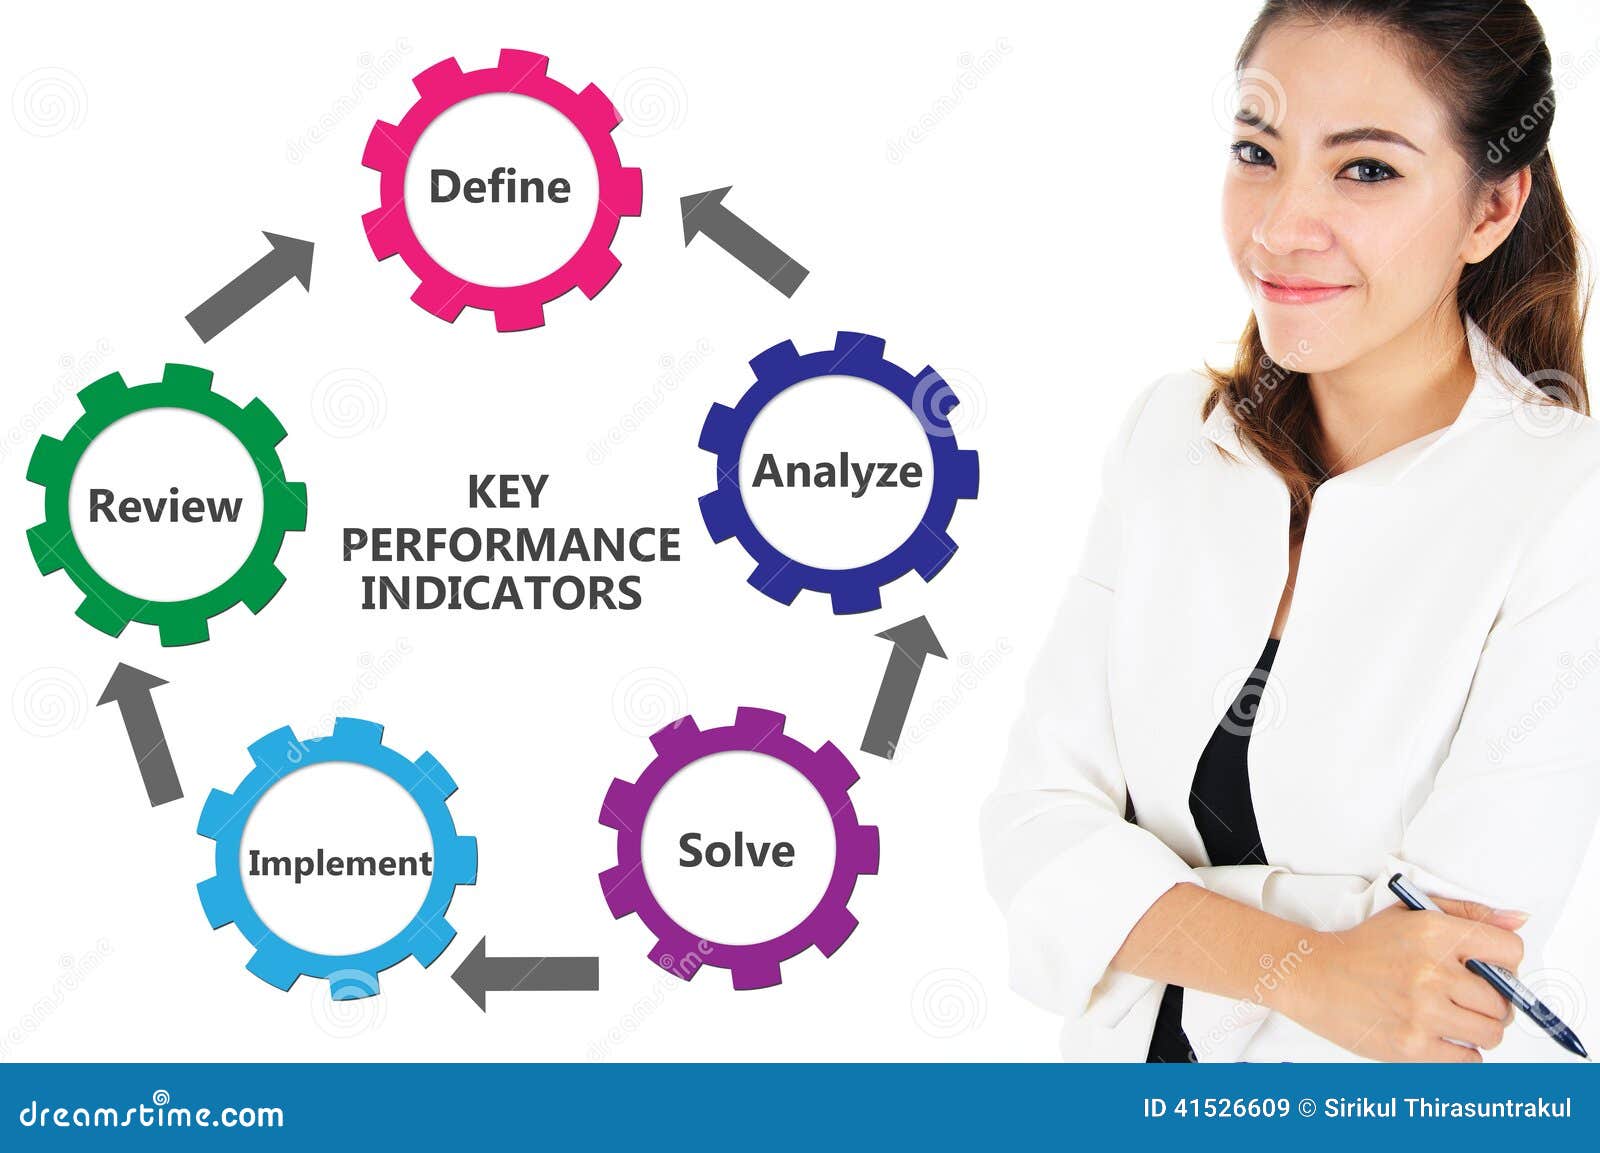 kpi, key performance indicators chart